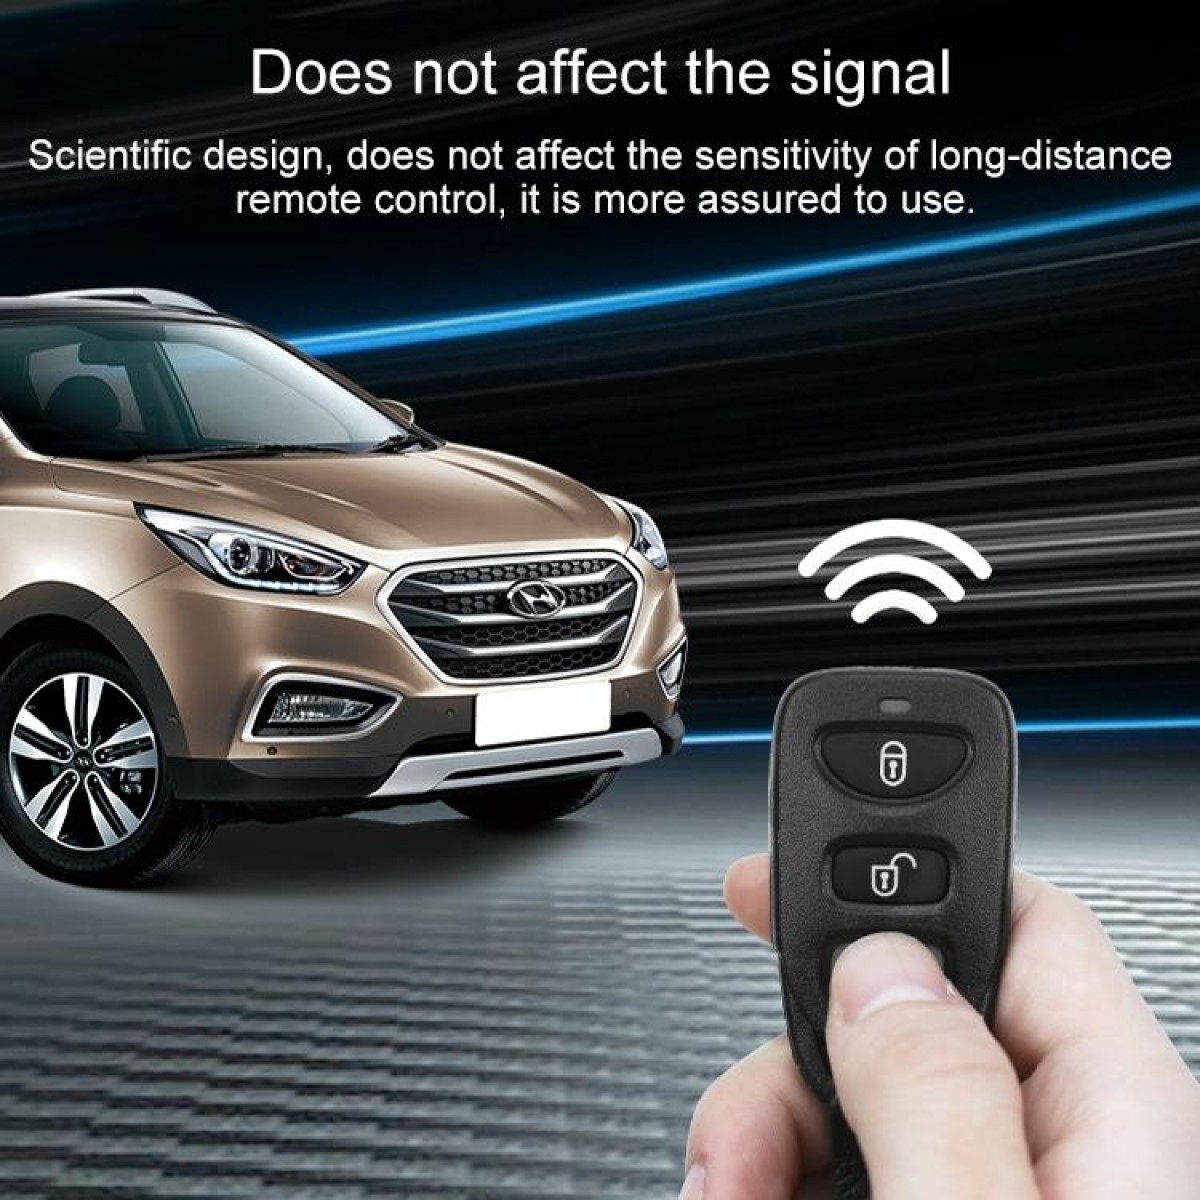 315MHz 3+1 Split Wireless 4-button Remote Control Car Copy Type Remote Control Transmitter for Hyundai / KIA